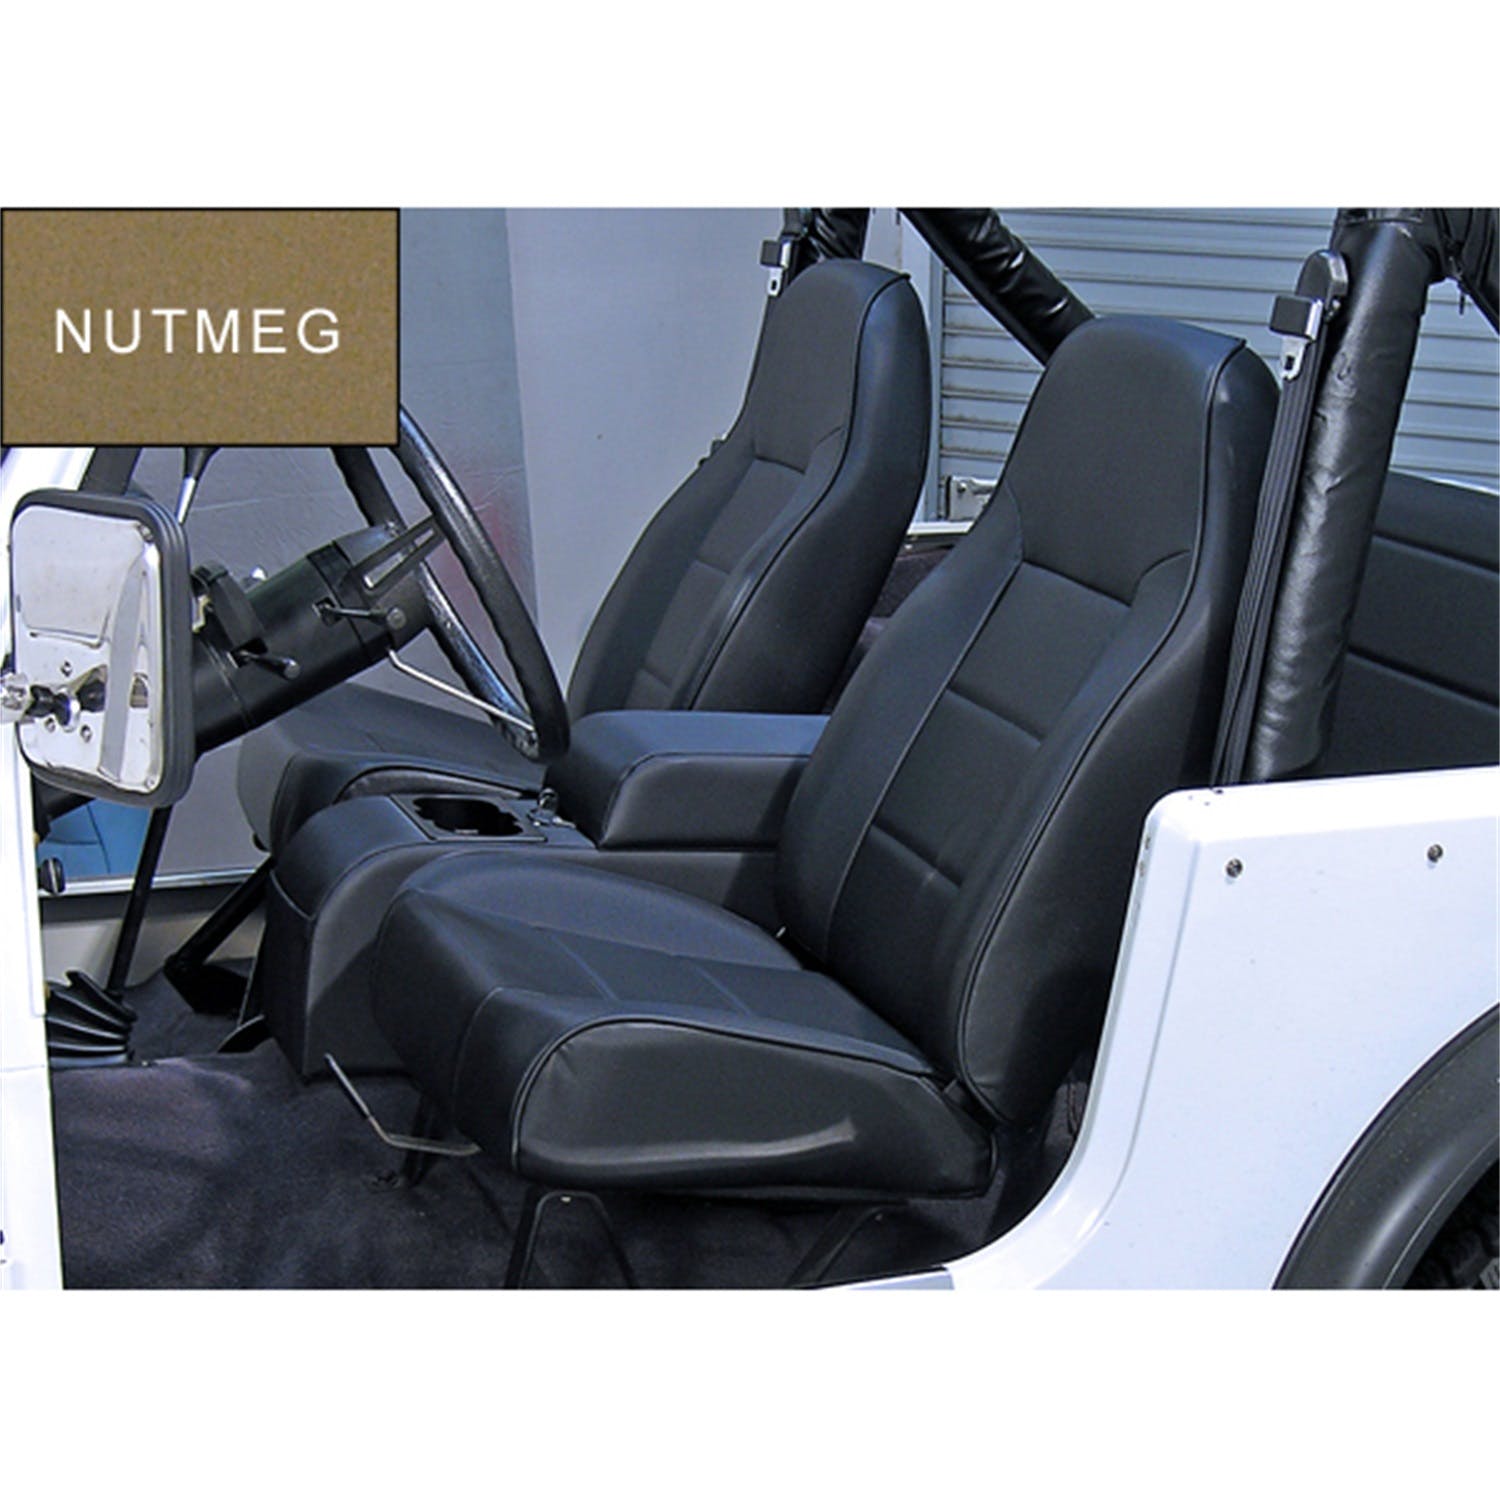 Rugged Ridge 13401.07 High-Back Front Seat; No-Recline; Nutmeg; 76-02 Jeep CJ/Wrangler YJ/TJ